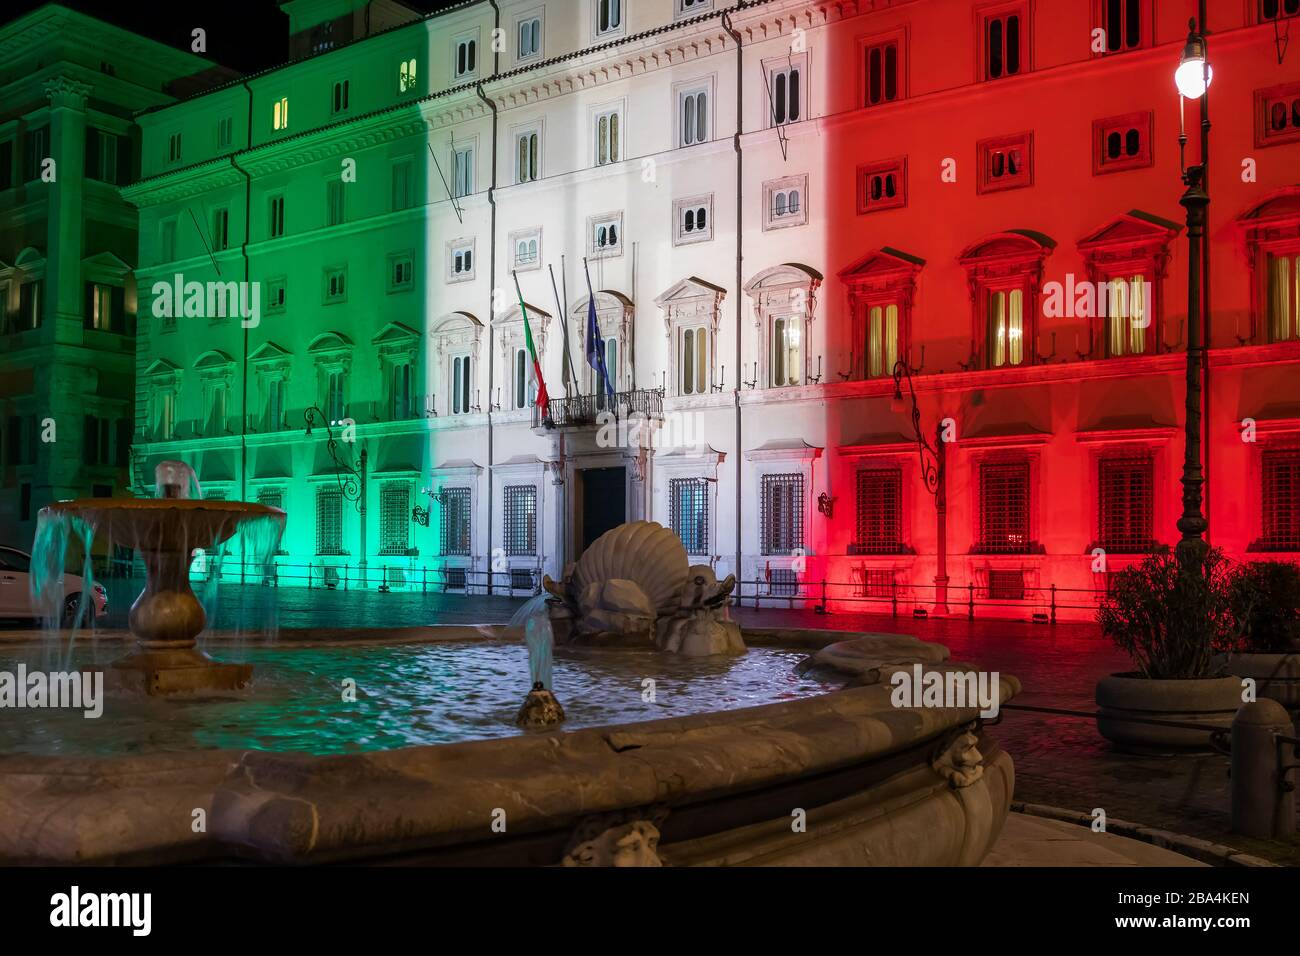 Rome, Italy - March 24, 2020: Palazzo Chigi, seat of the Italian government, facade of the building illuminated with the colors of the Italian flag. Coronavirus emergency Italy. Stock Photo